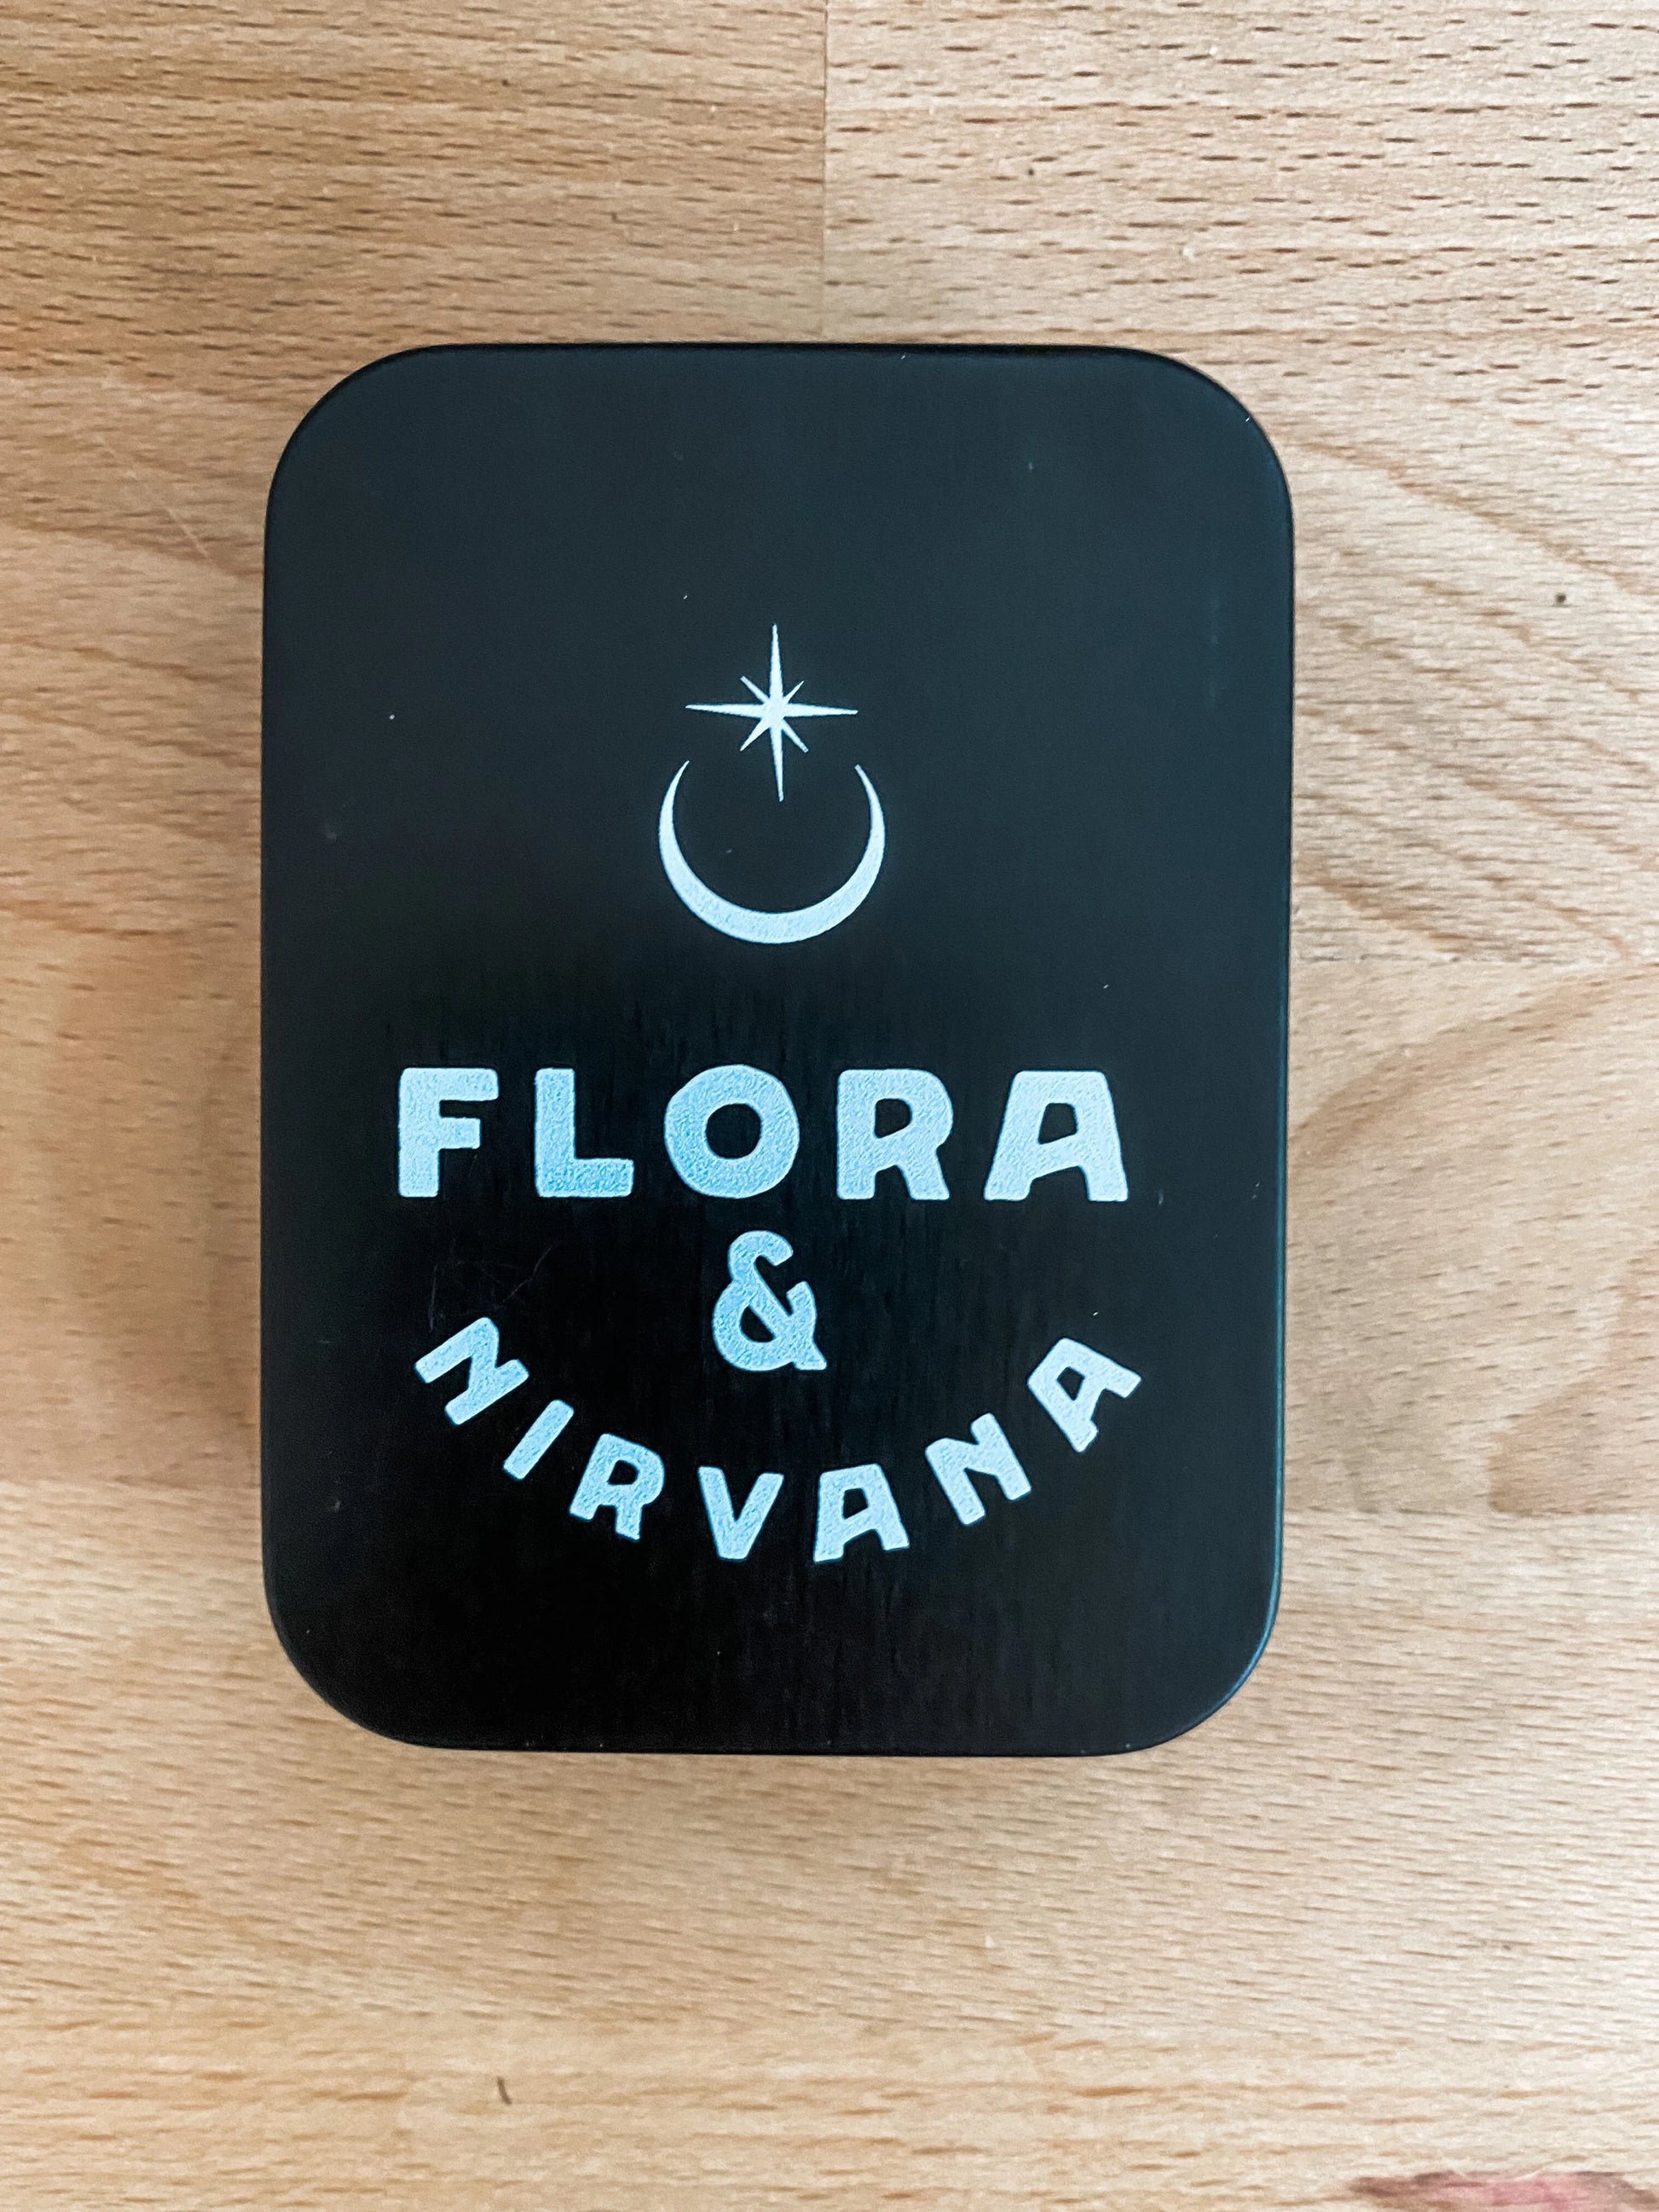 Sunflower Print Windproof Flip Top Lighter - Flora and Nirvana